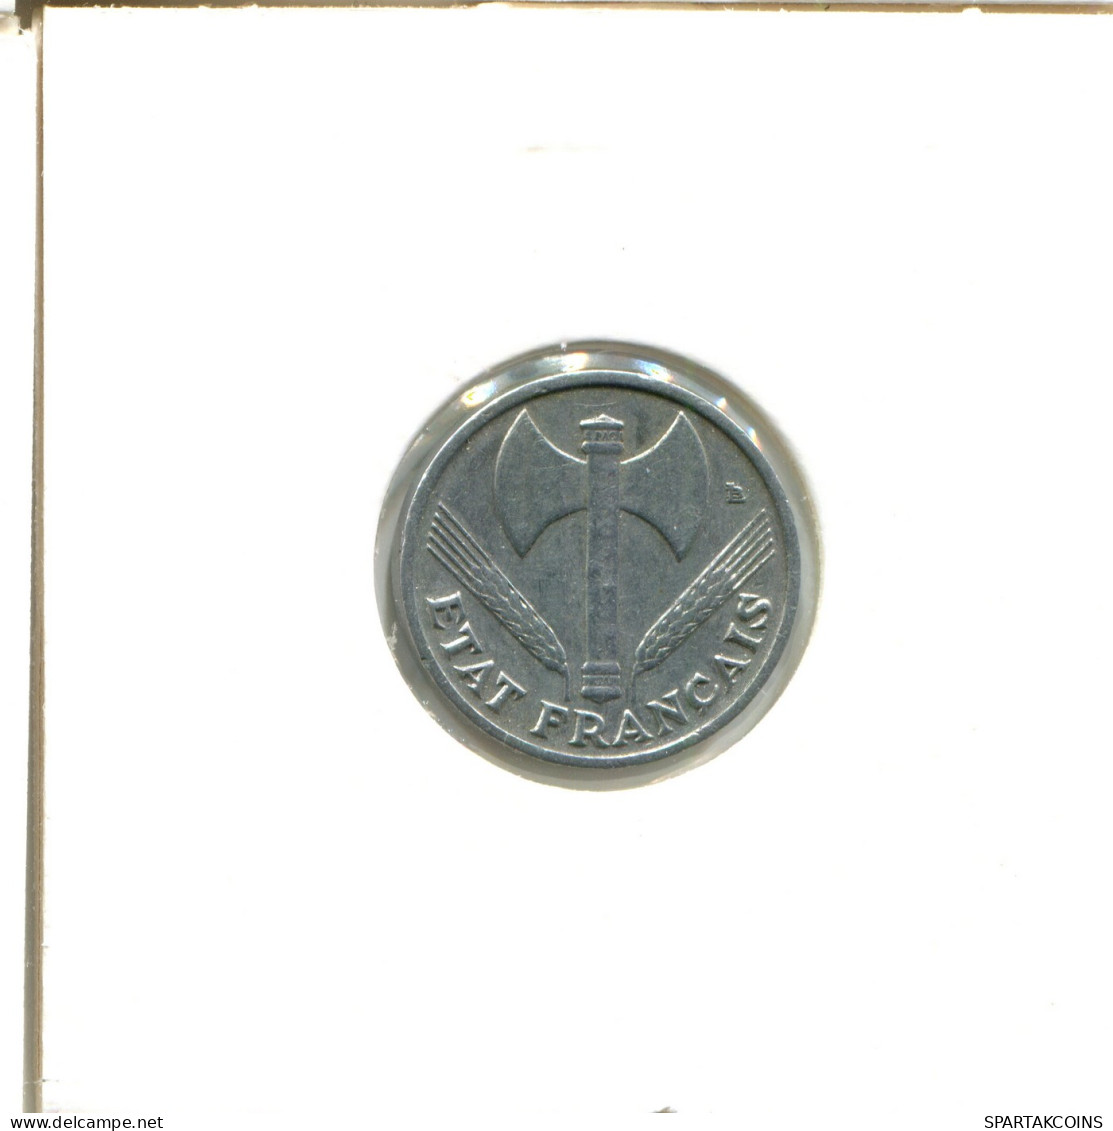 50 CENTIMES 1943 FRANCIA FRANCE Moneda #AX590.E - 50 Centimes